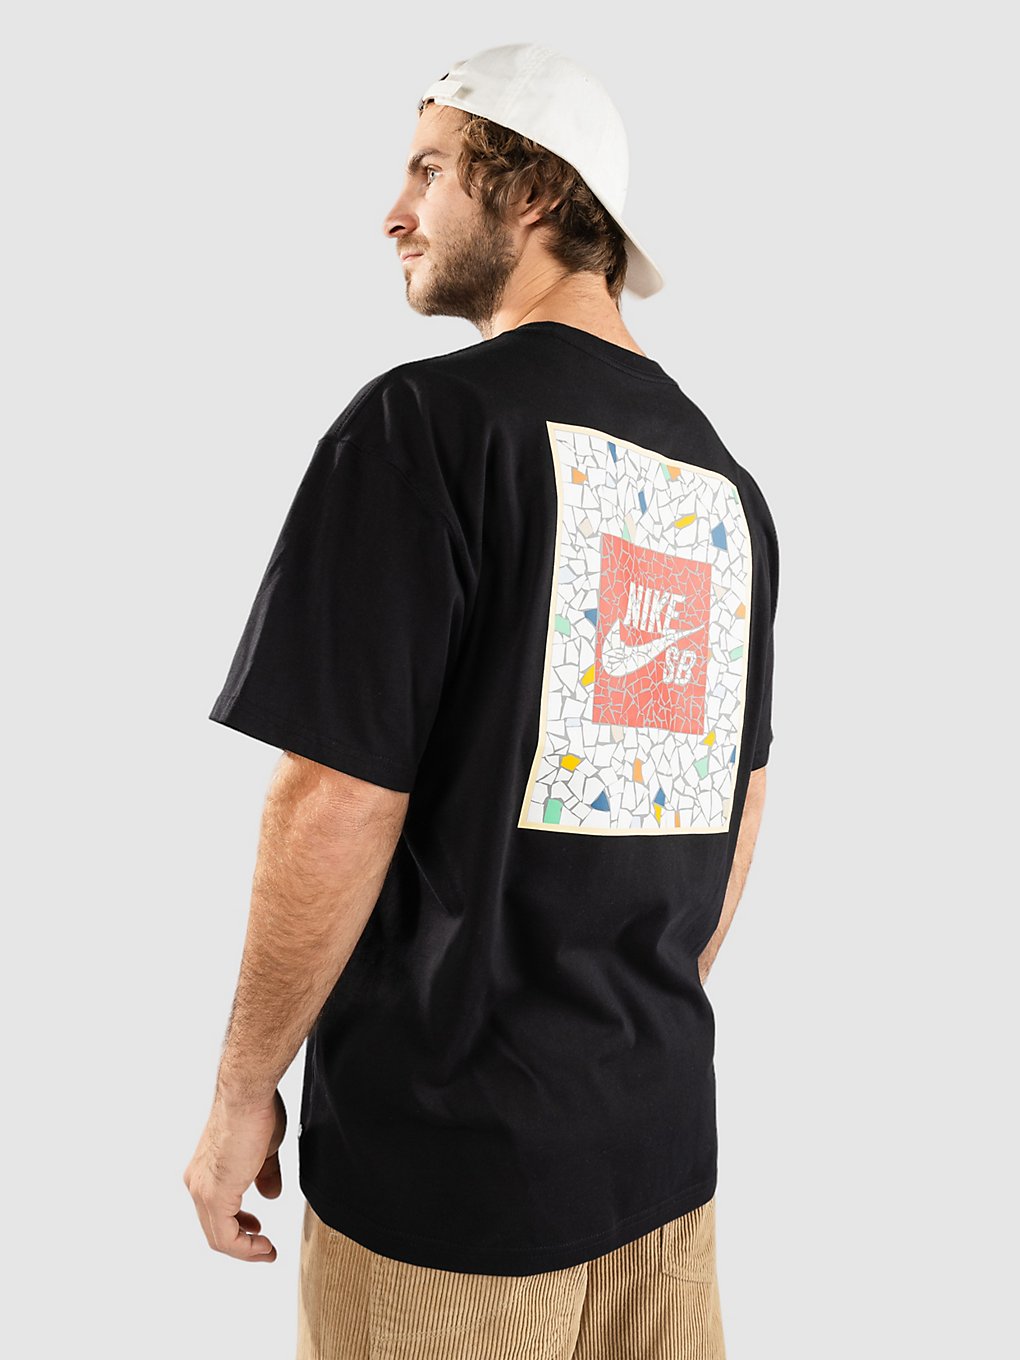 Nike Mosaic T-Shirt black kaufen